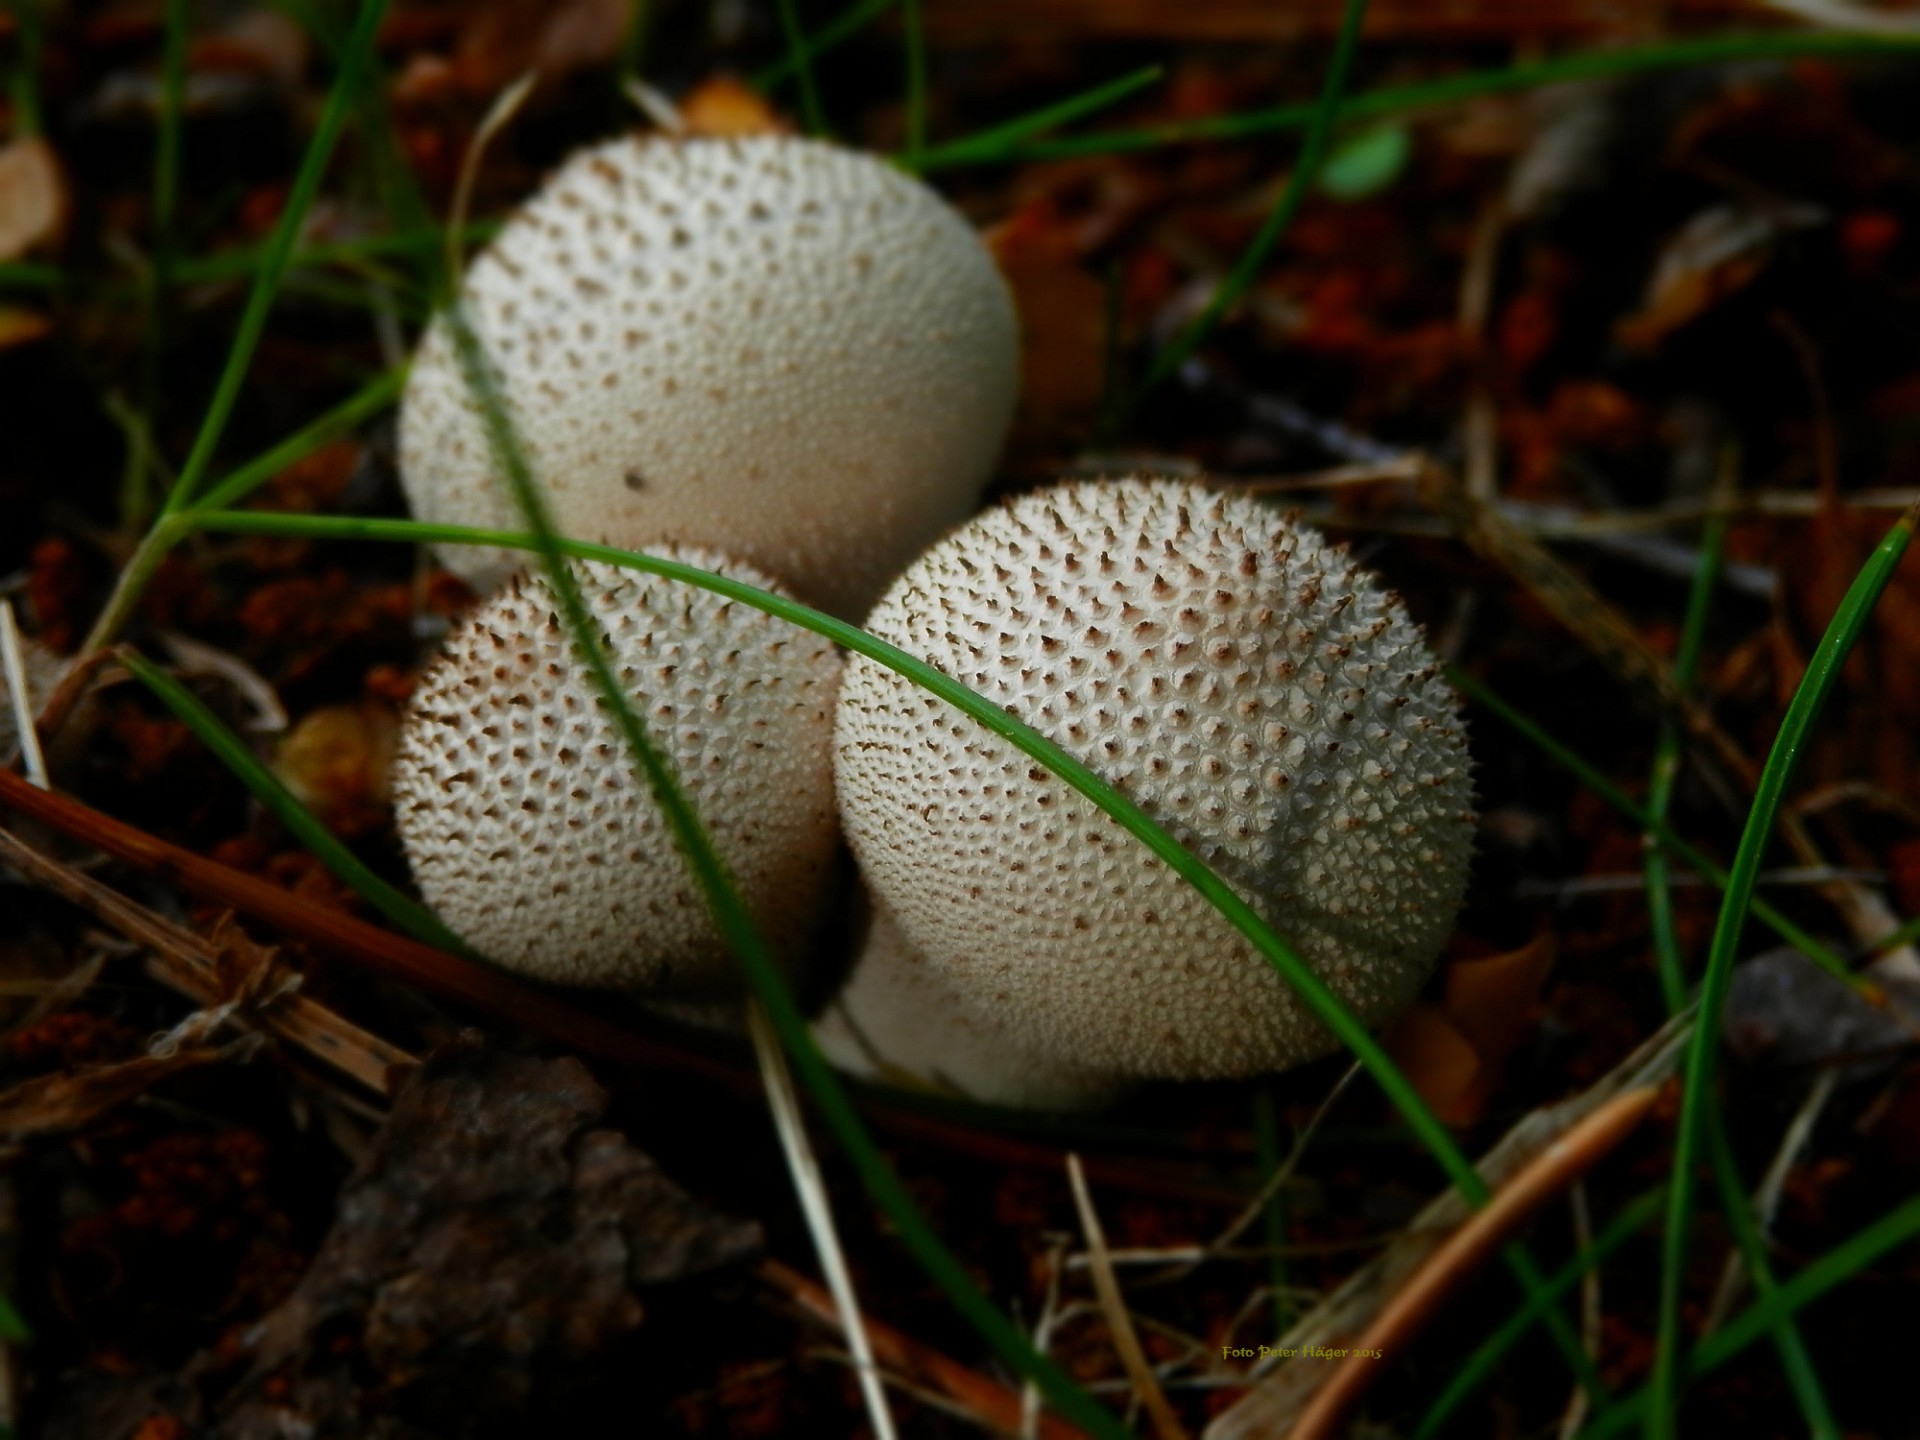 Round,mushrooms,fungi,puffballs,free pictures - free photo from needpix.com...